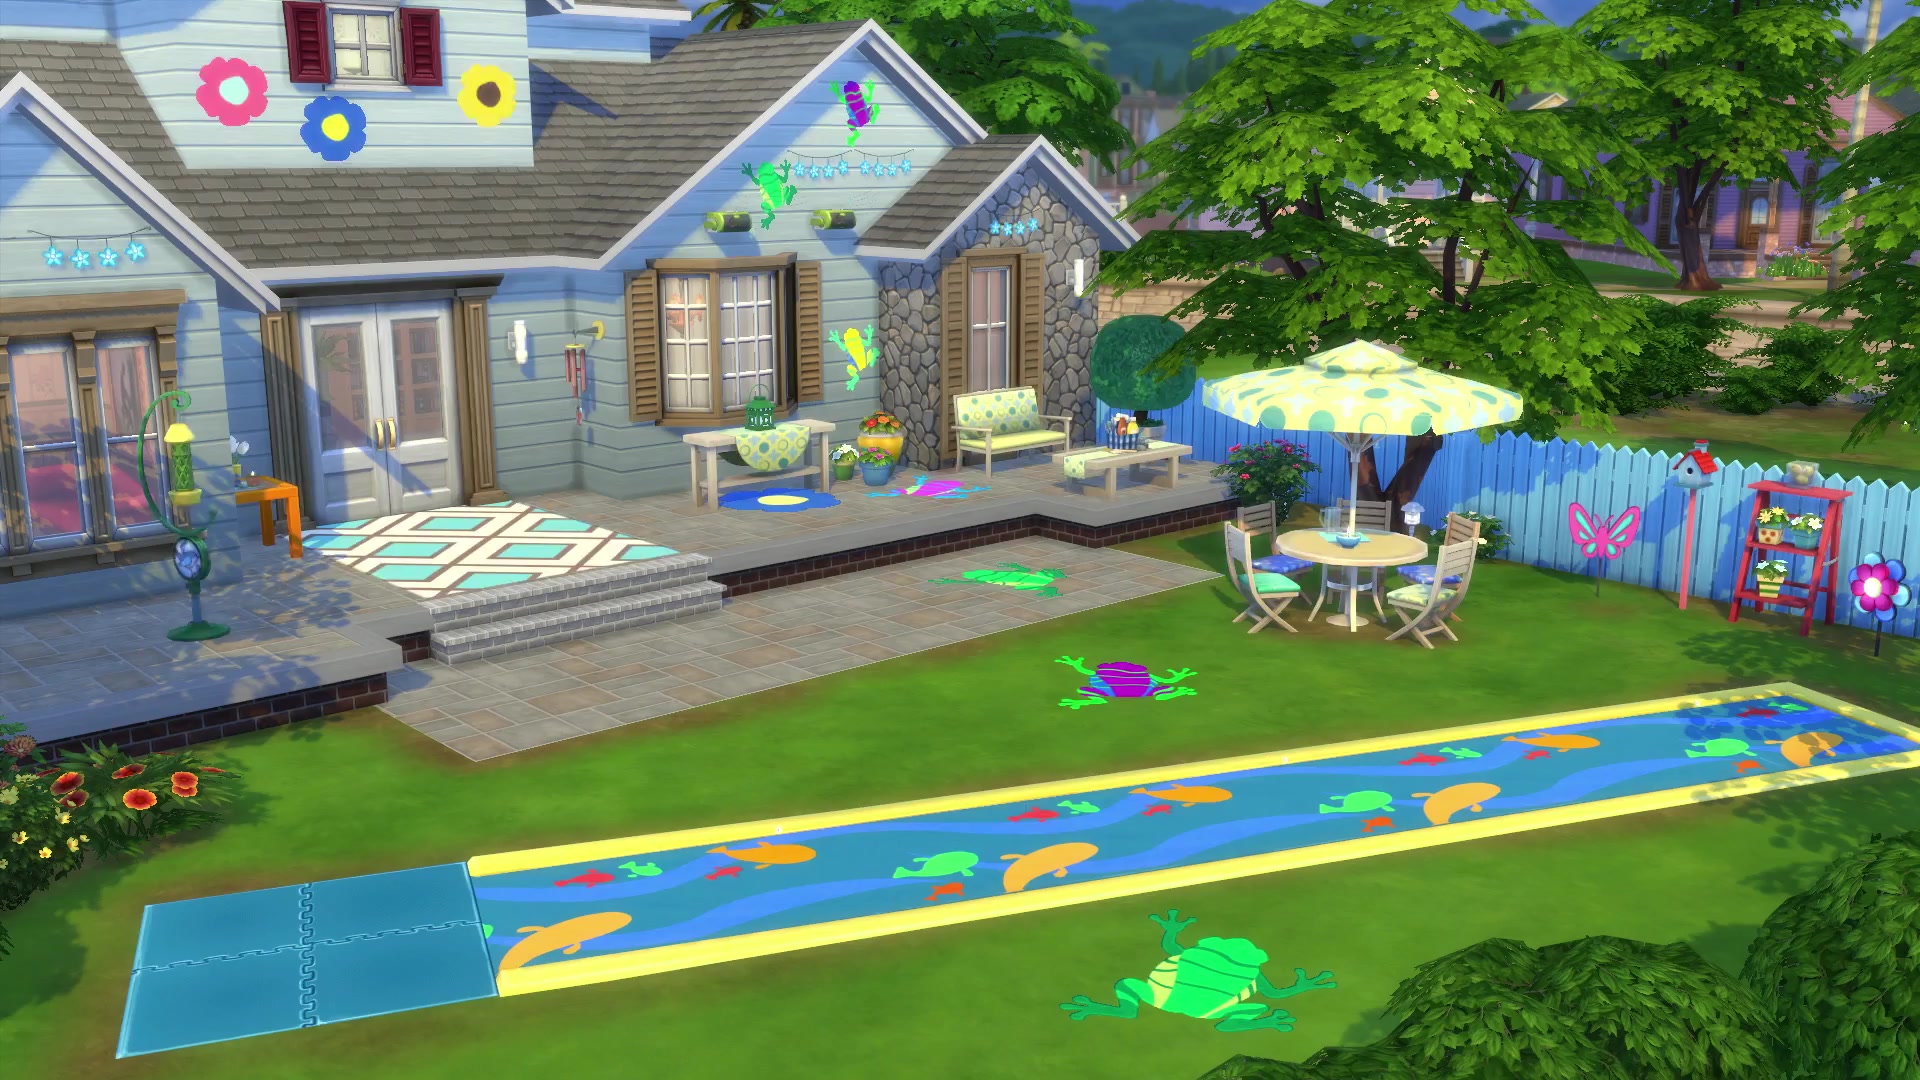 The Sims 4 Backyard Stuff- Official Trailer 1323 | SimsVIP